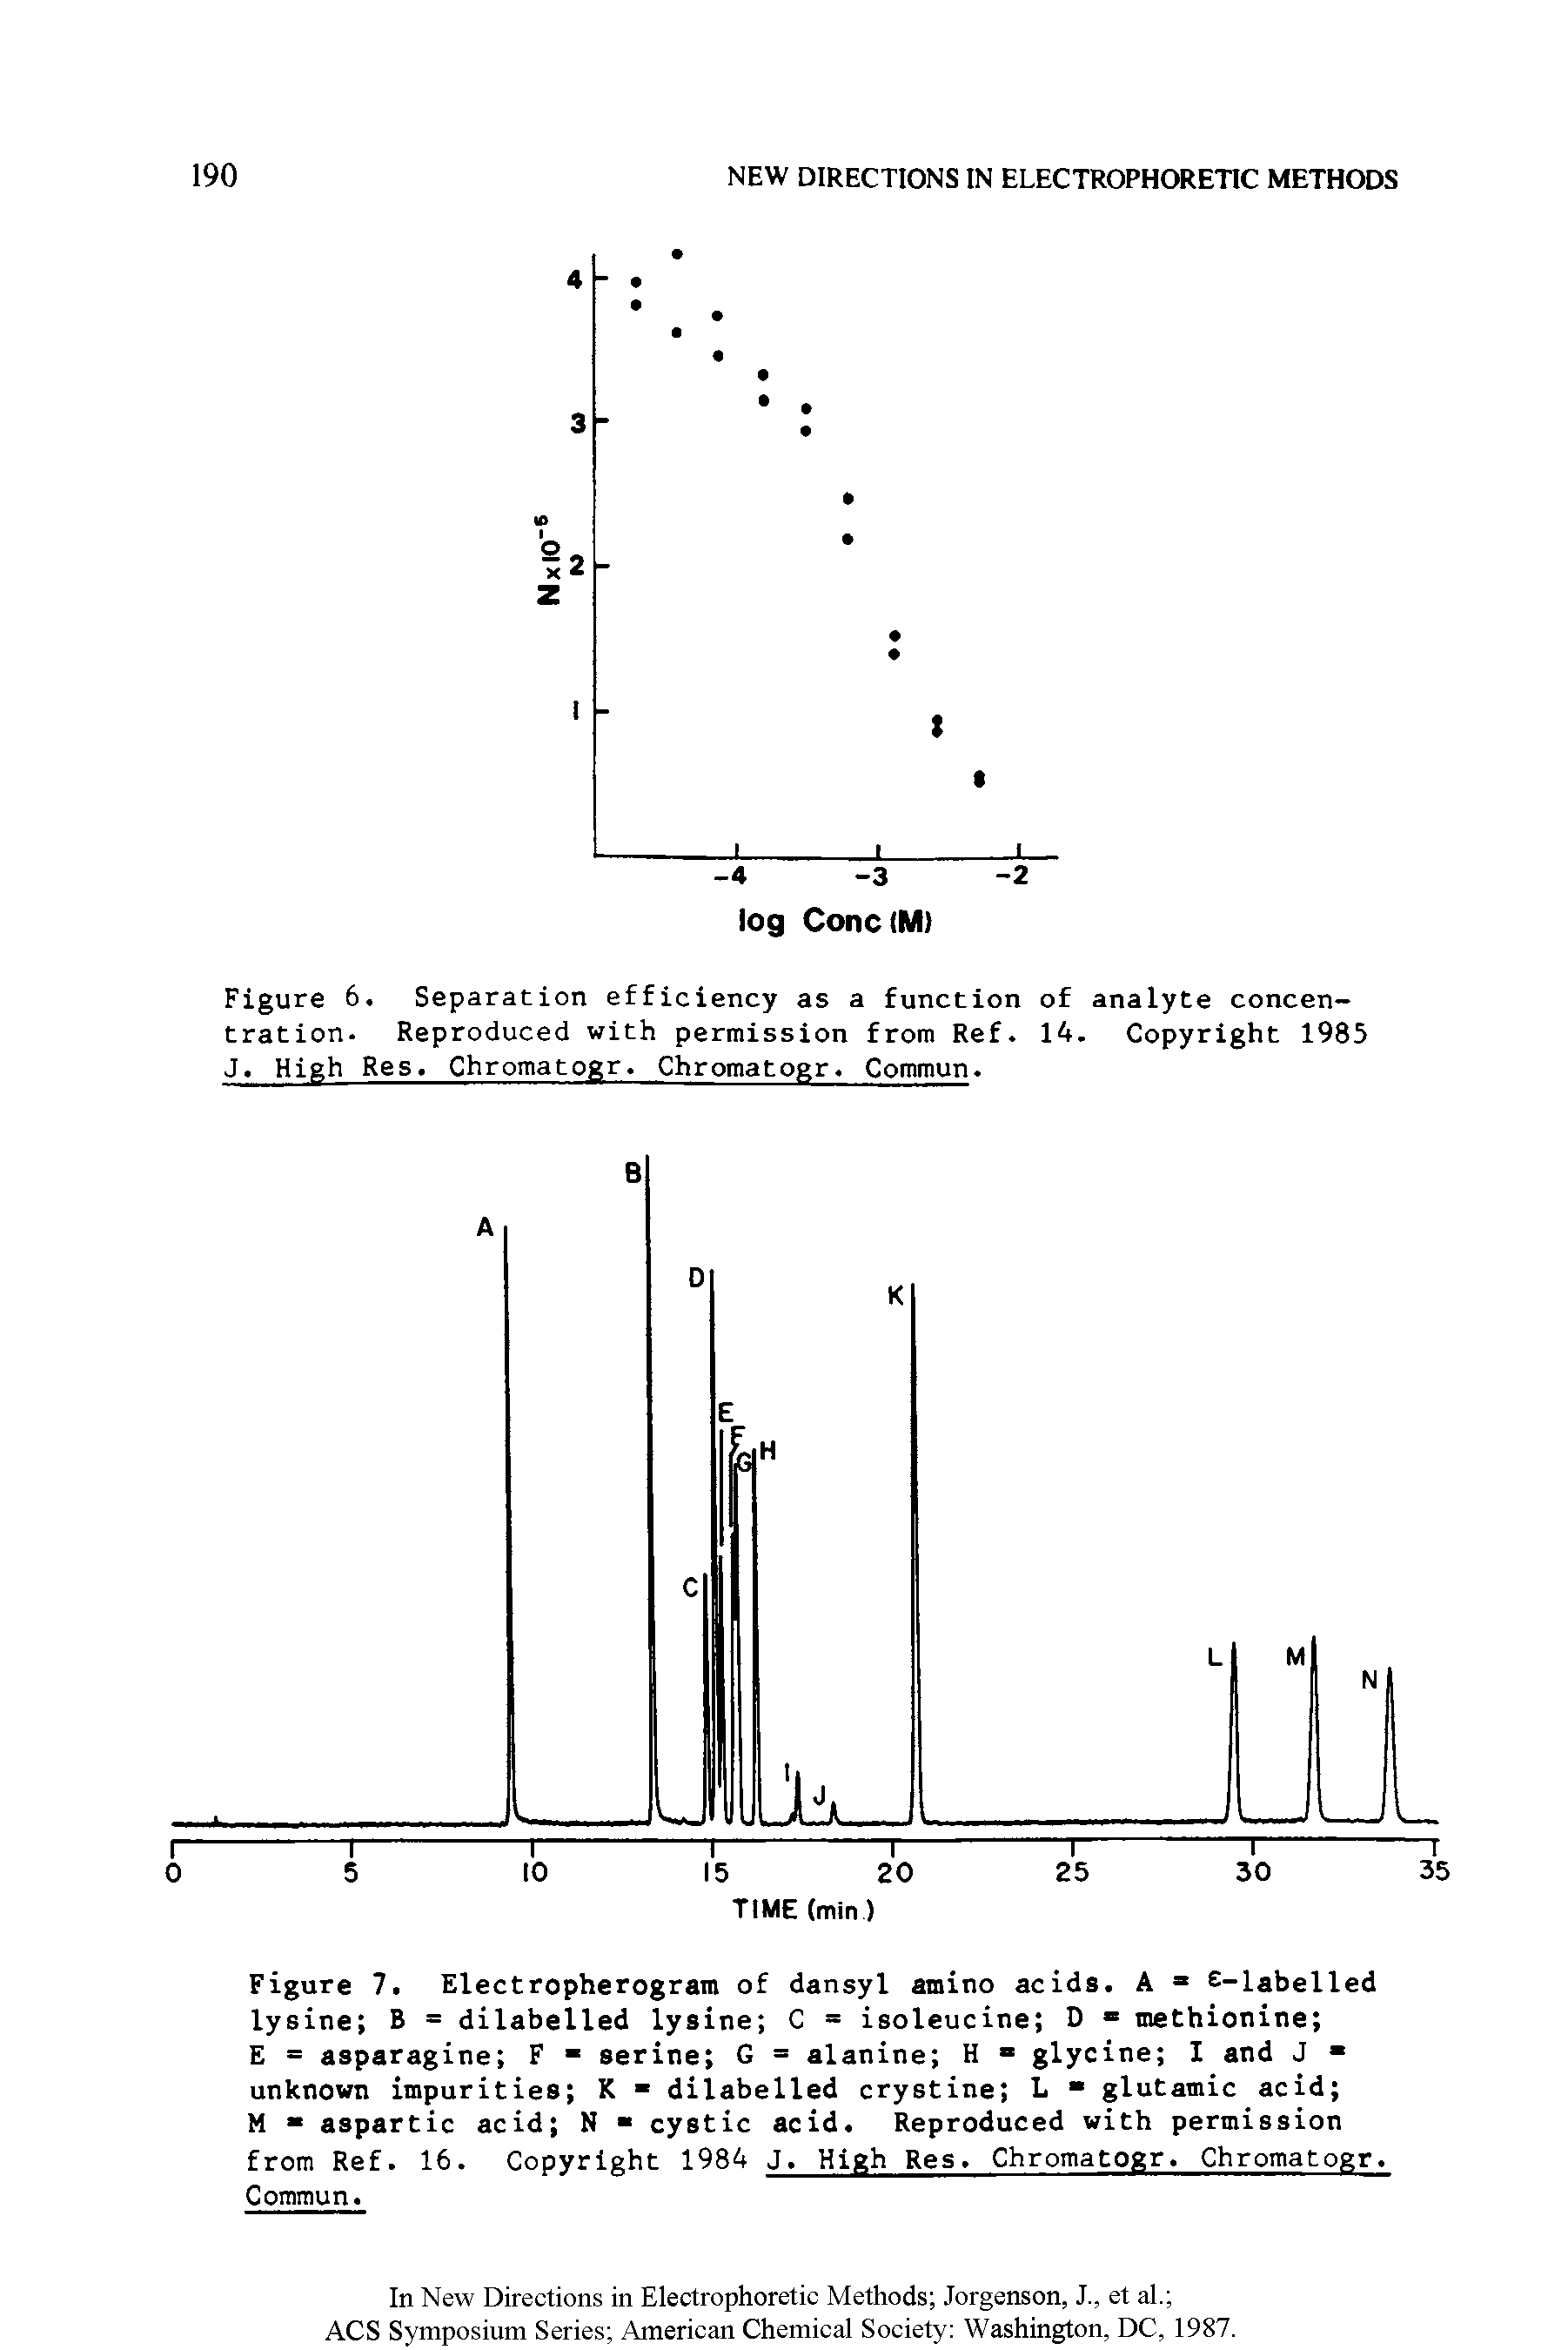 Figure 7. Electropherogram of dansyl amino acids. A = -labelled lysine B = dilabelled lysine C = isoleucine D methionine ...